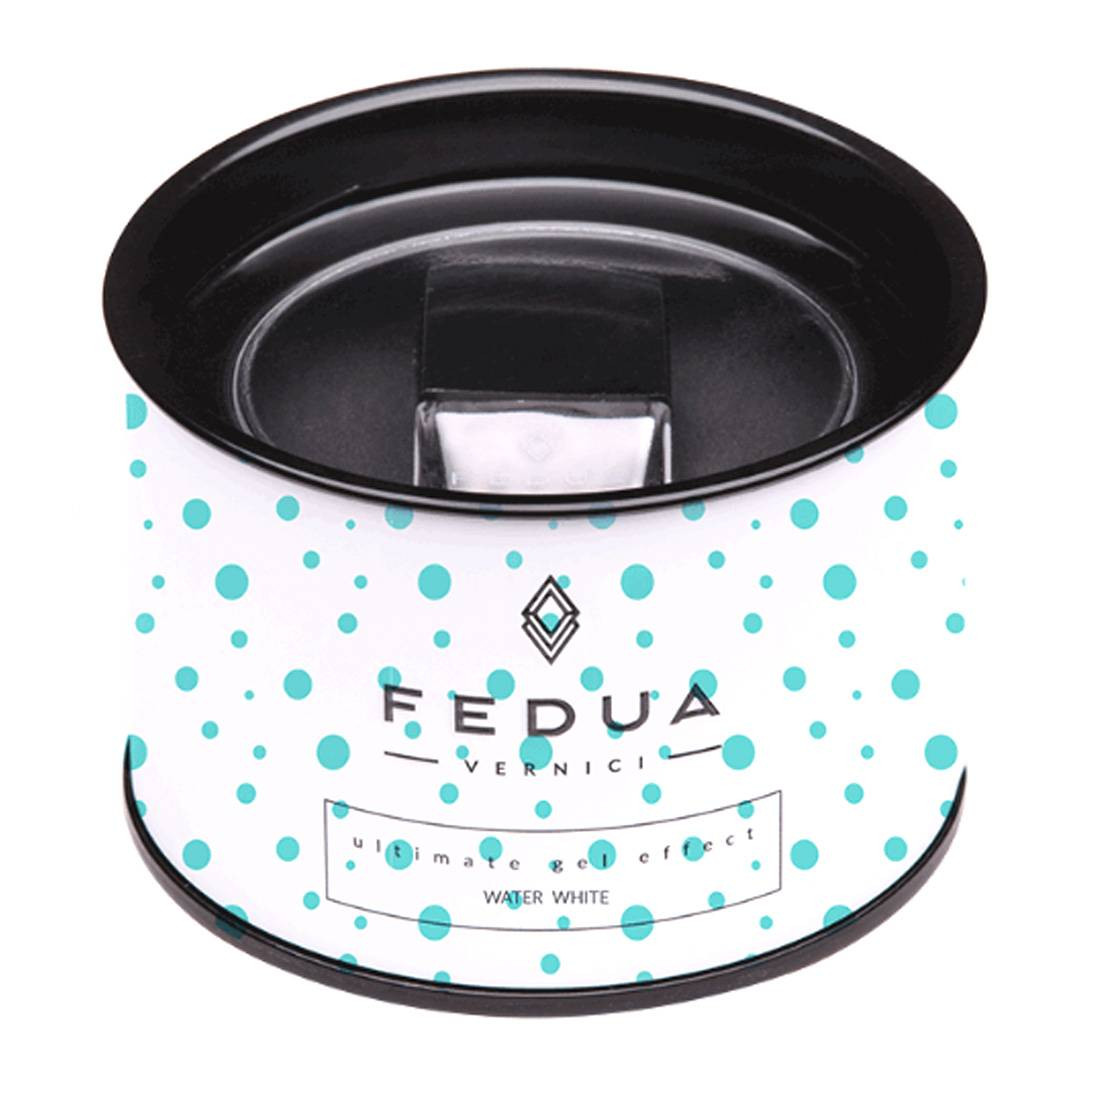 Fedua Vernici Ultimate Collection Water White - Лак для ногтей Прозрачно-белый